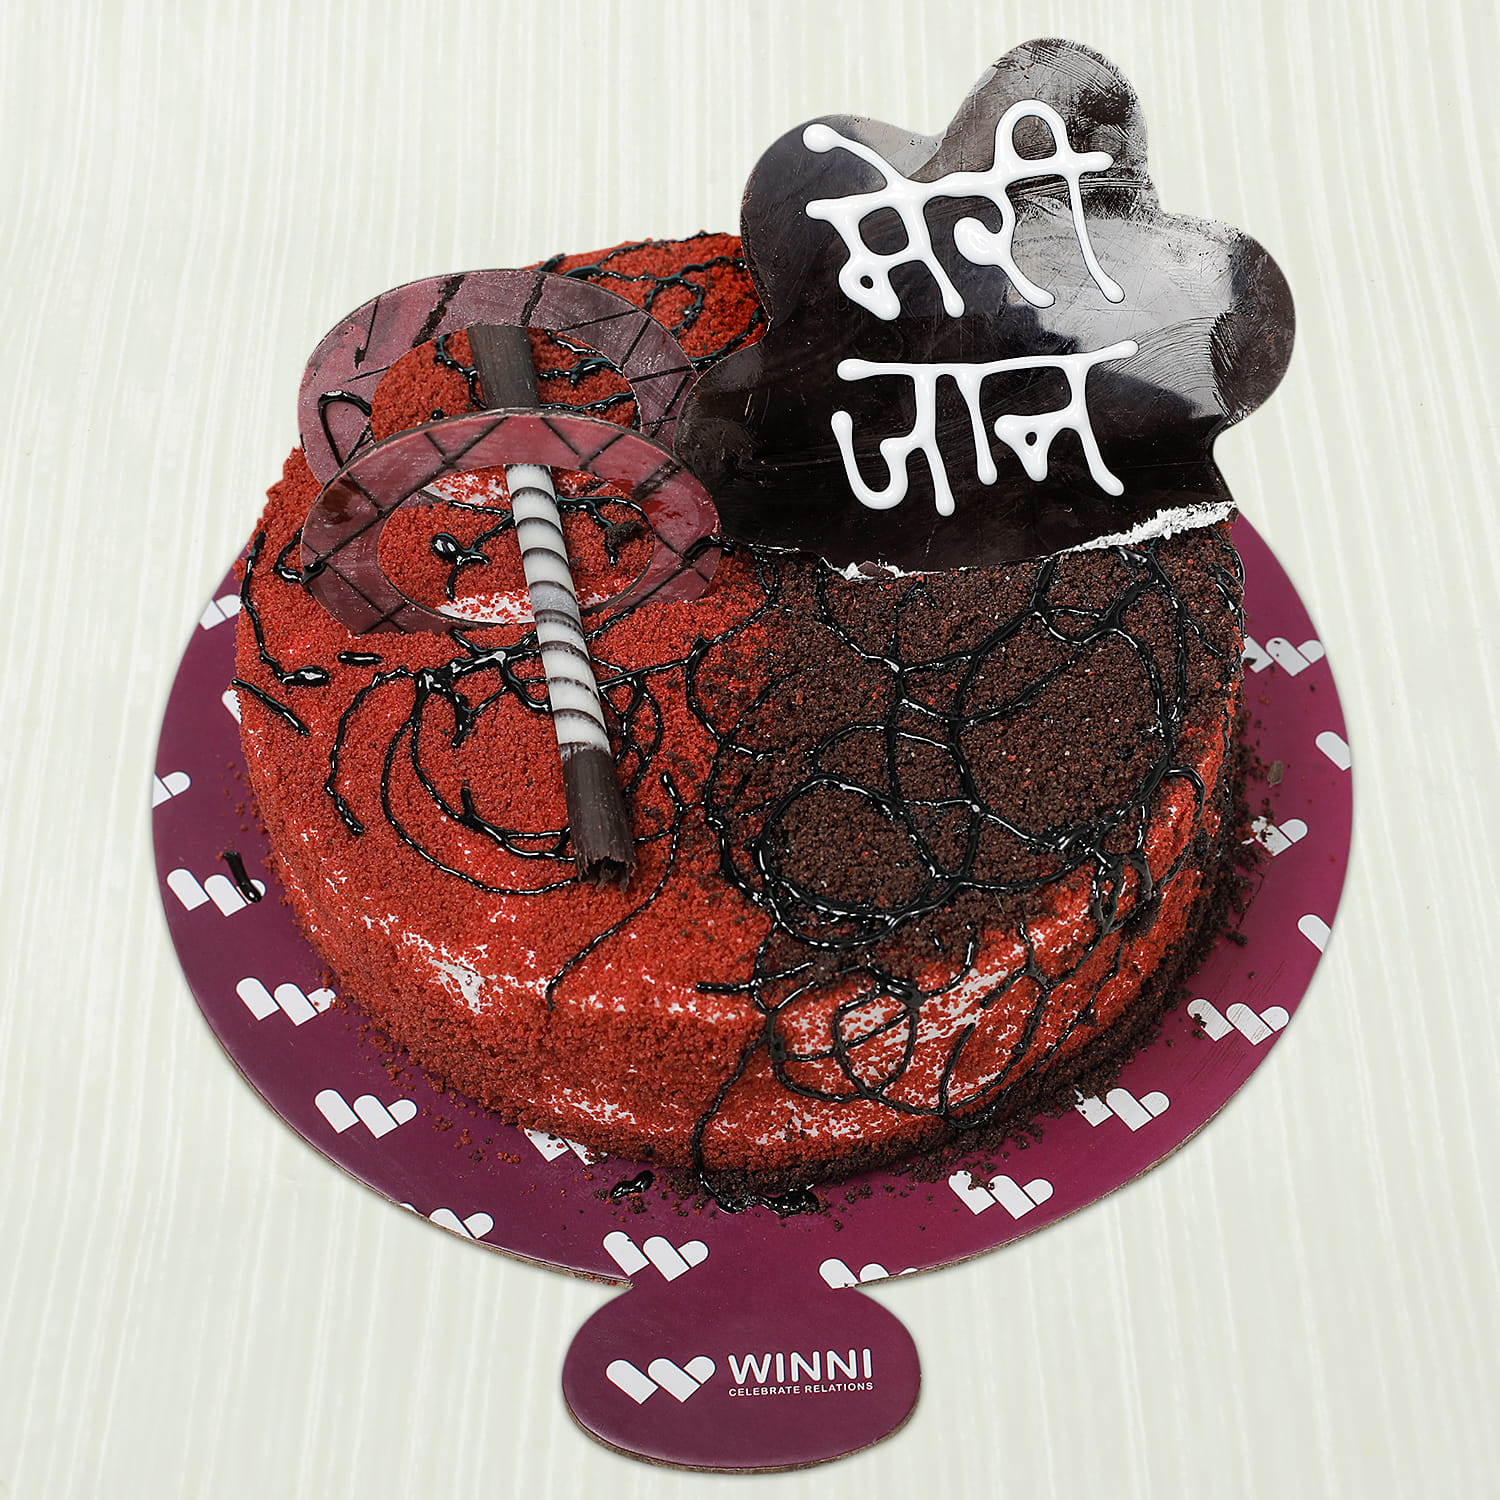 AKASH TRUCK BIRTHDAY CAKE - Rashmi's Bakery